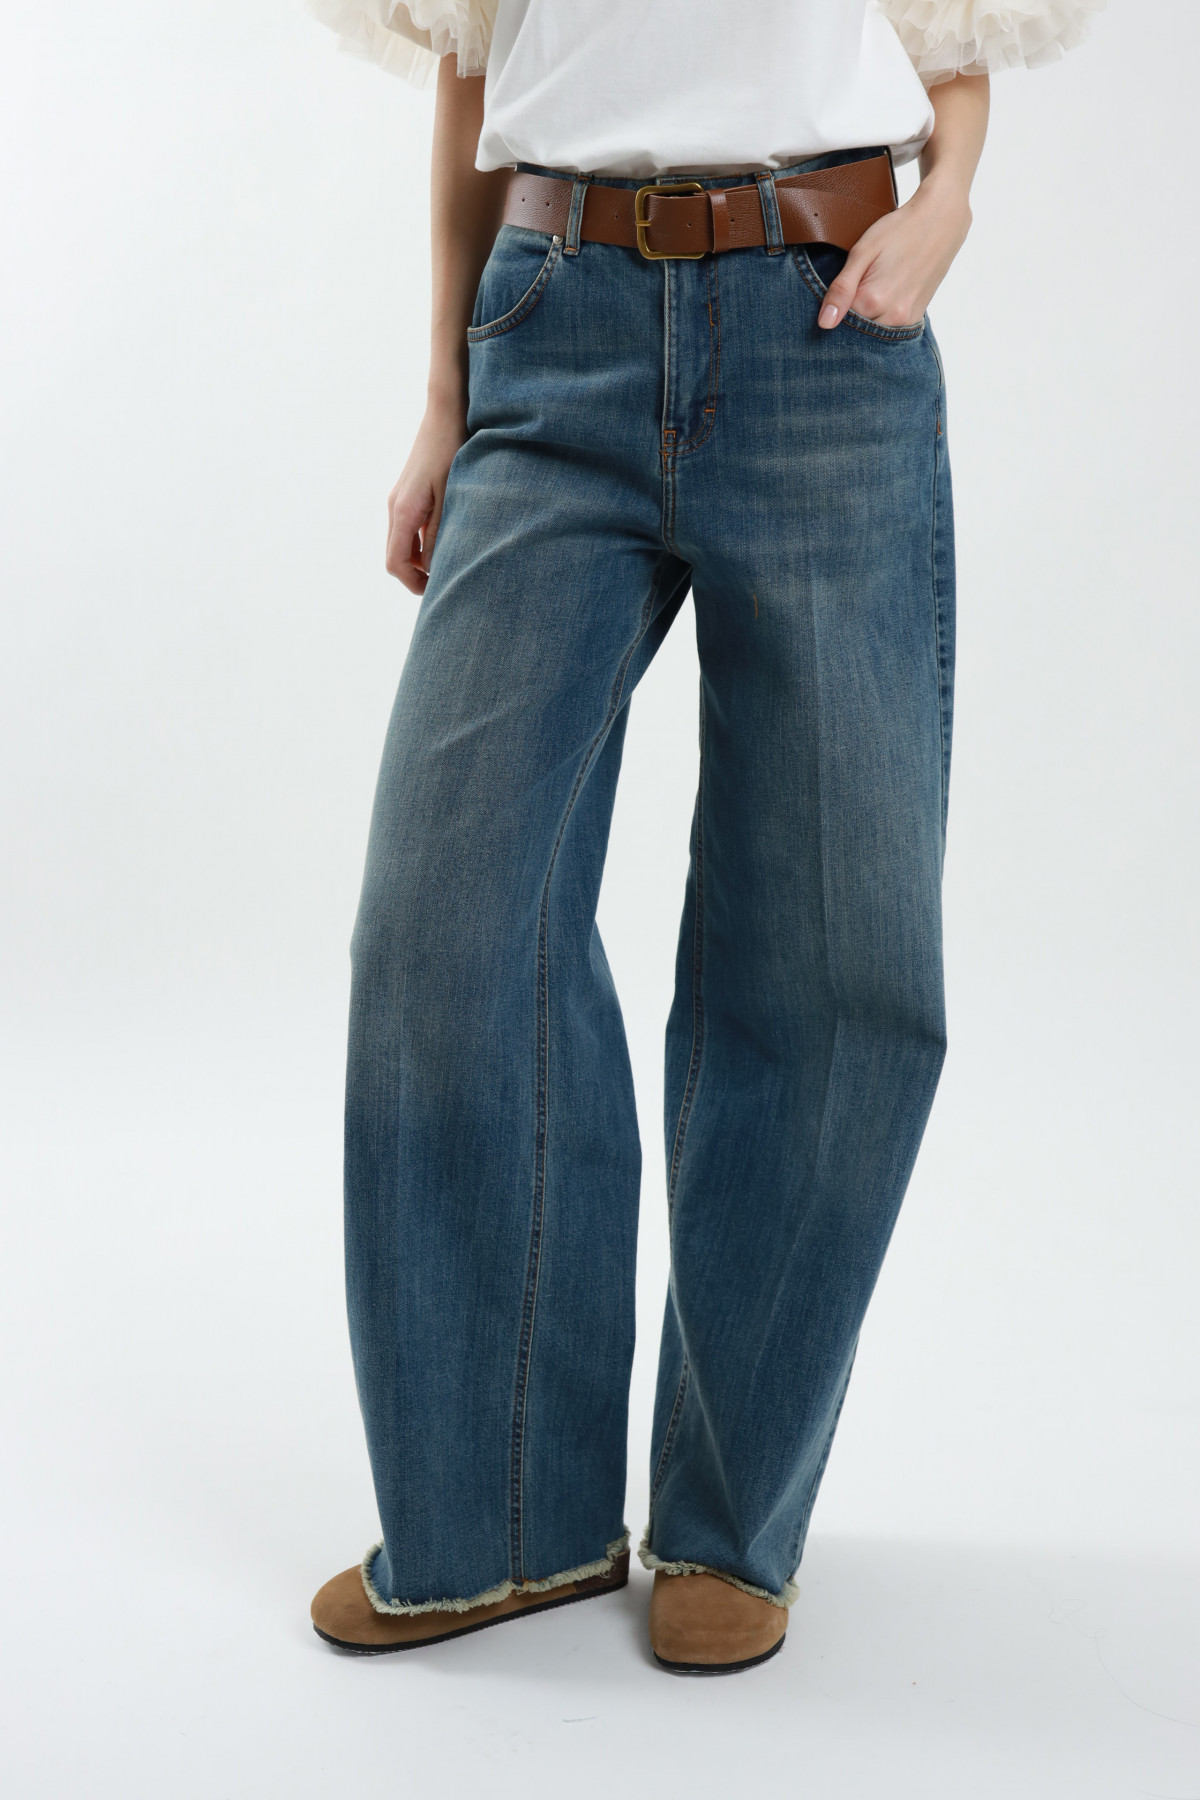 Jeans mit ausgefranstem Saum